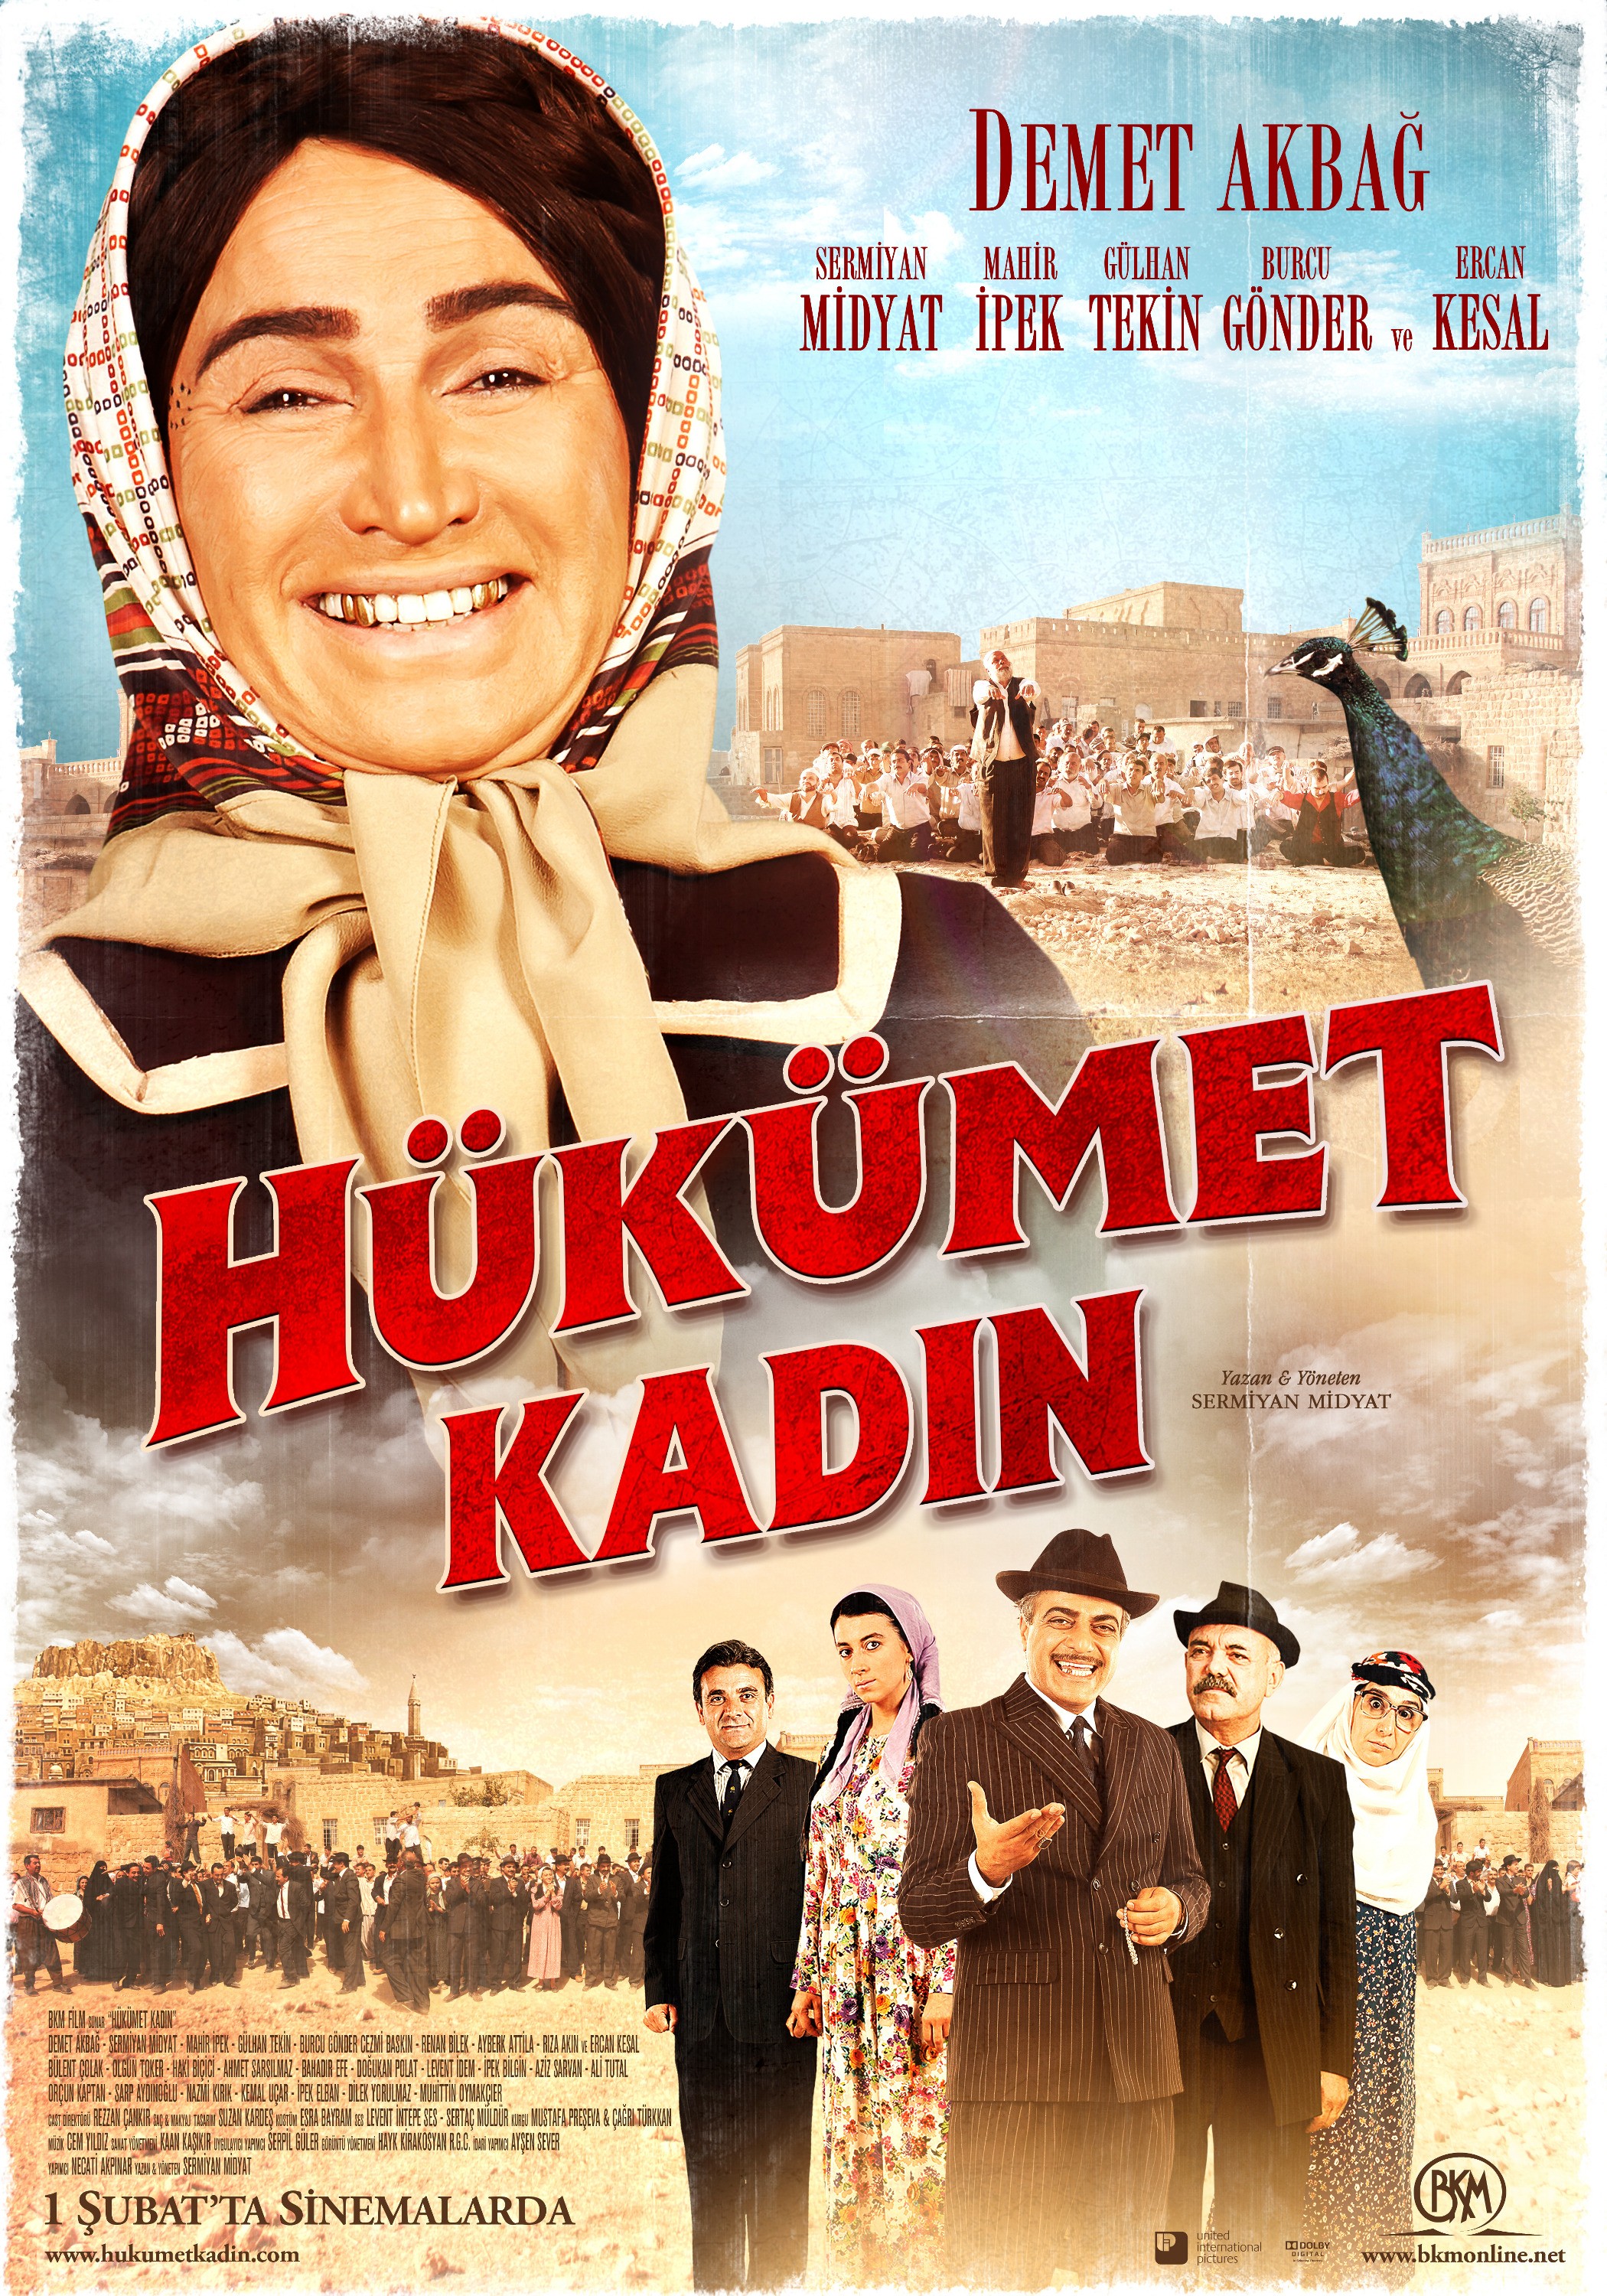 Mega Sized Movie Poster Image for Hükümet kadin (#6 of 6)